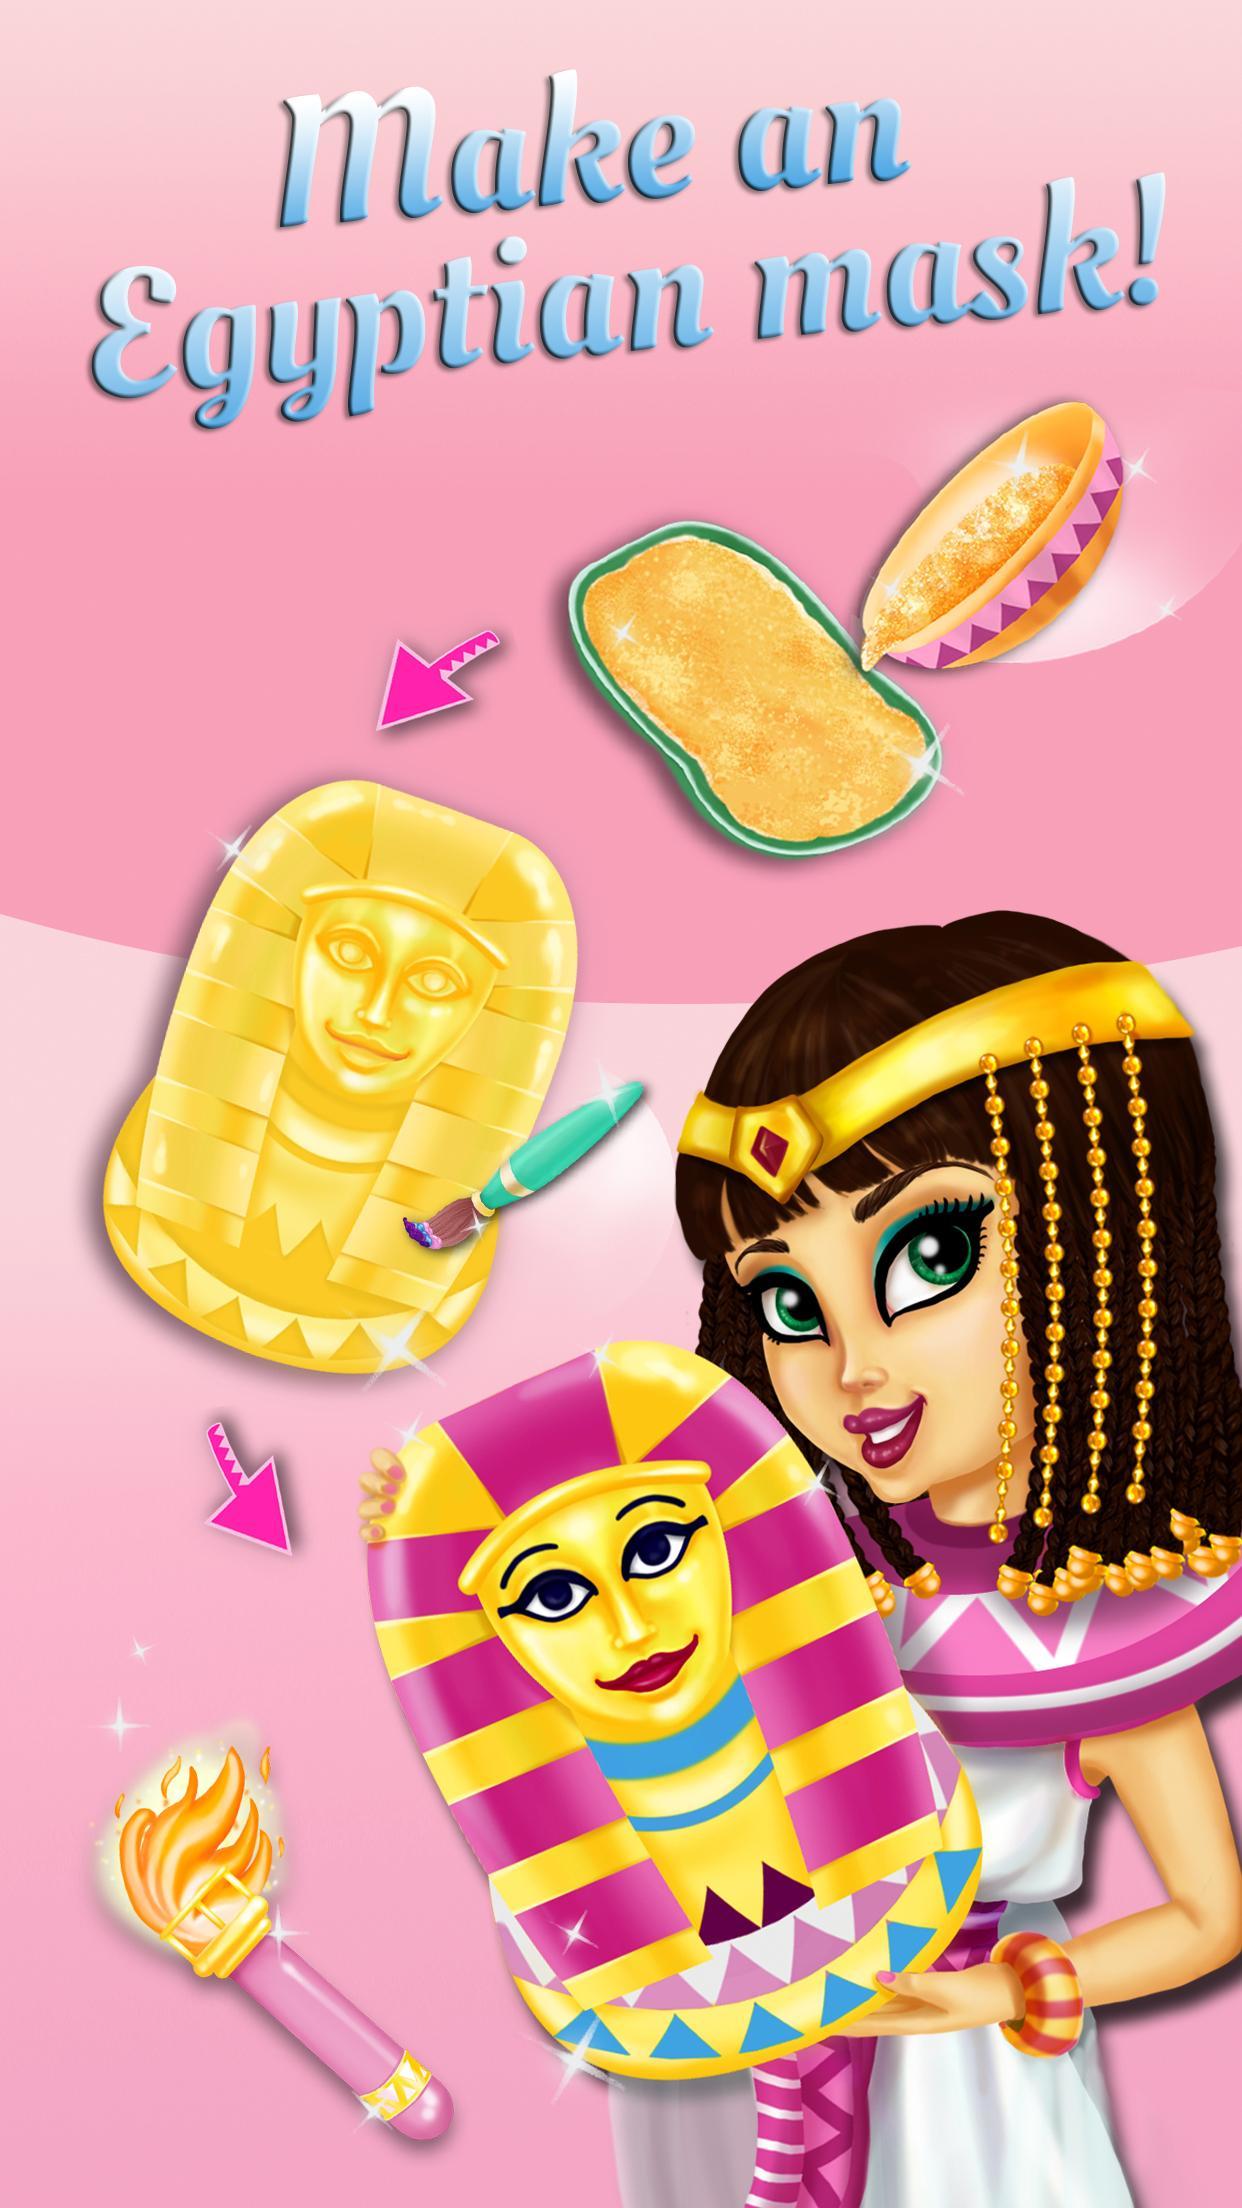 Screenshot 1 of doce princesa egípcia 1.0.38